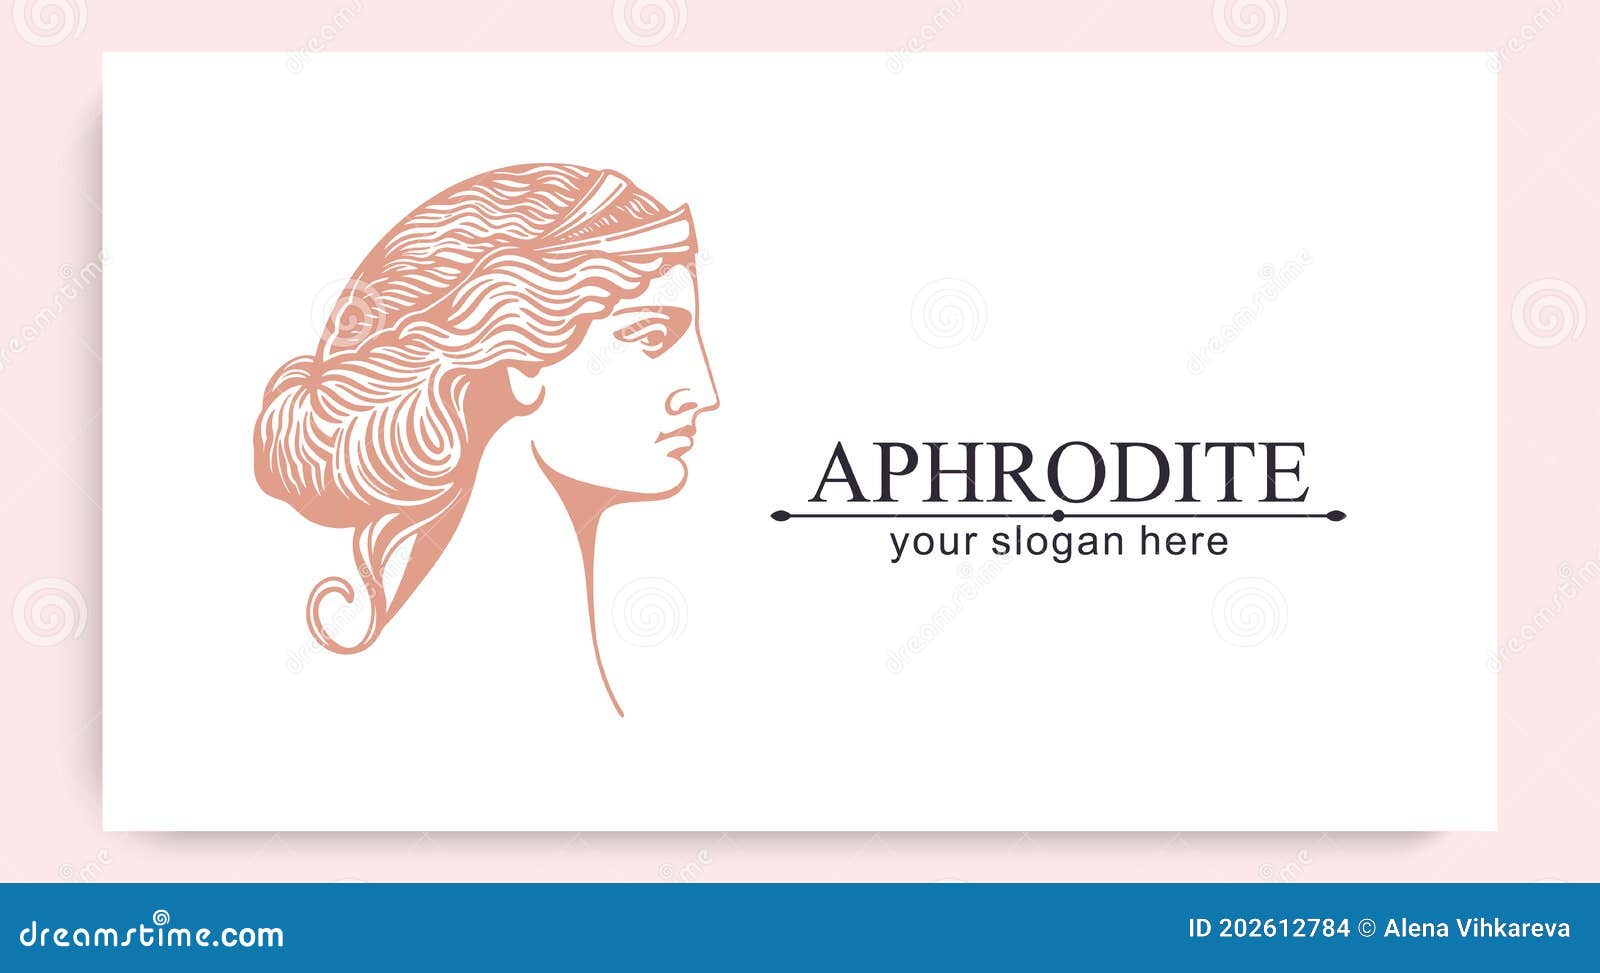 Aphrodite Logo Stock Illustrations 182 Aphrodite Logo Stock Illustrations Vectors Clipart Dreamstime